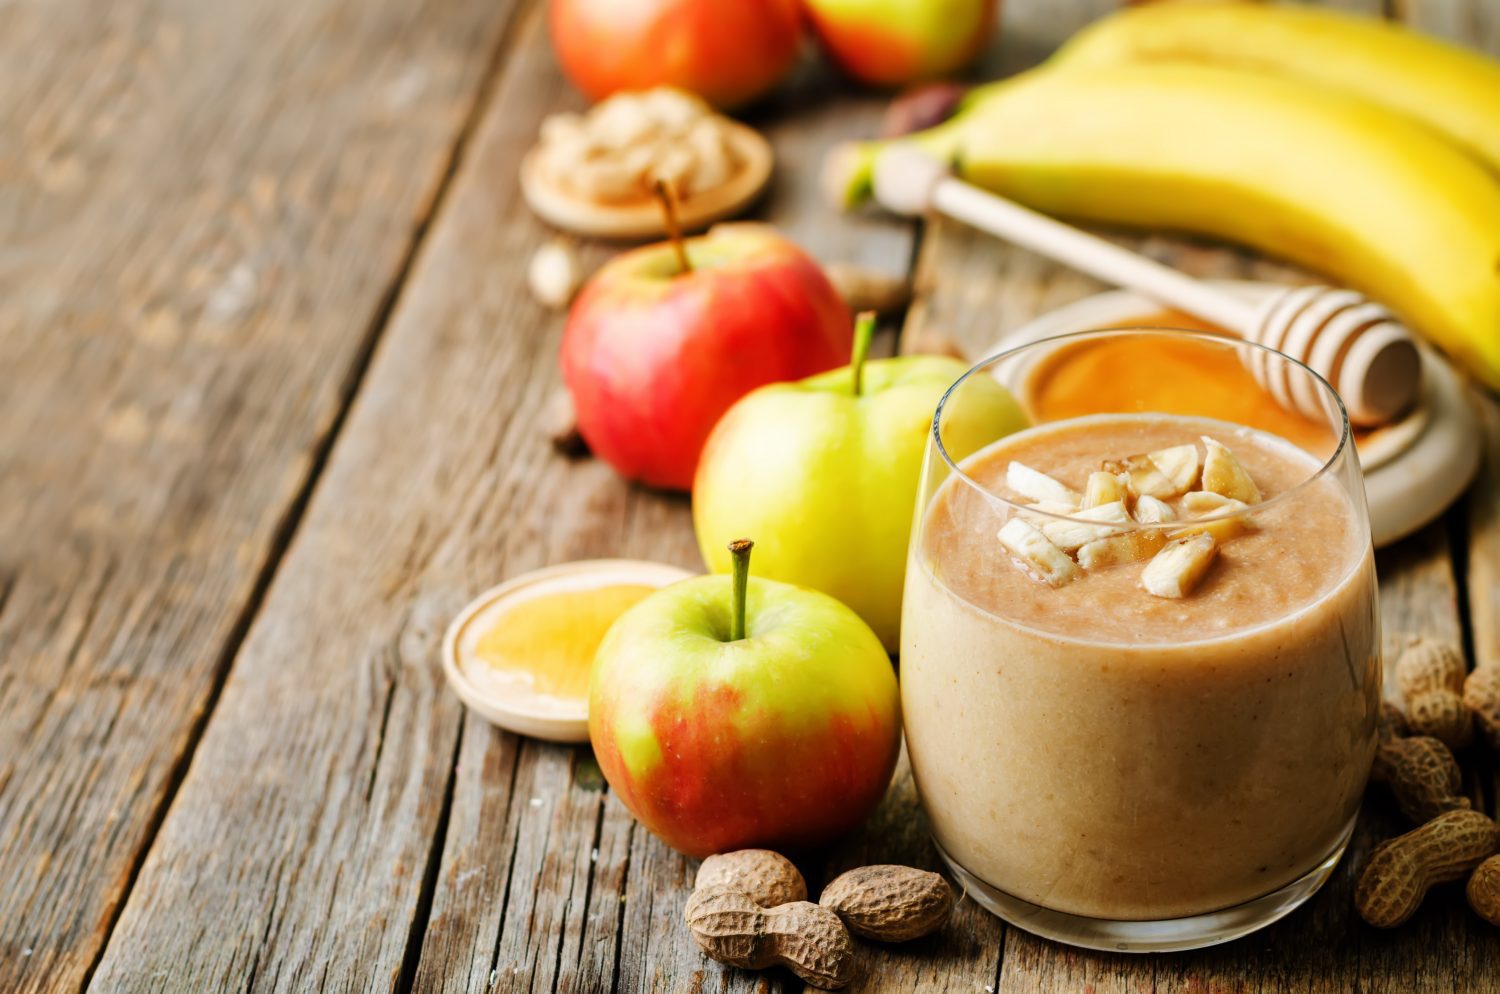 Apple banana peanut butter smoothie 2021 09 01 04 31 52 utc scaled